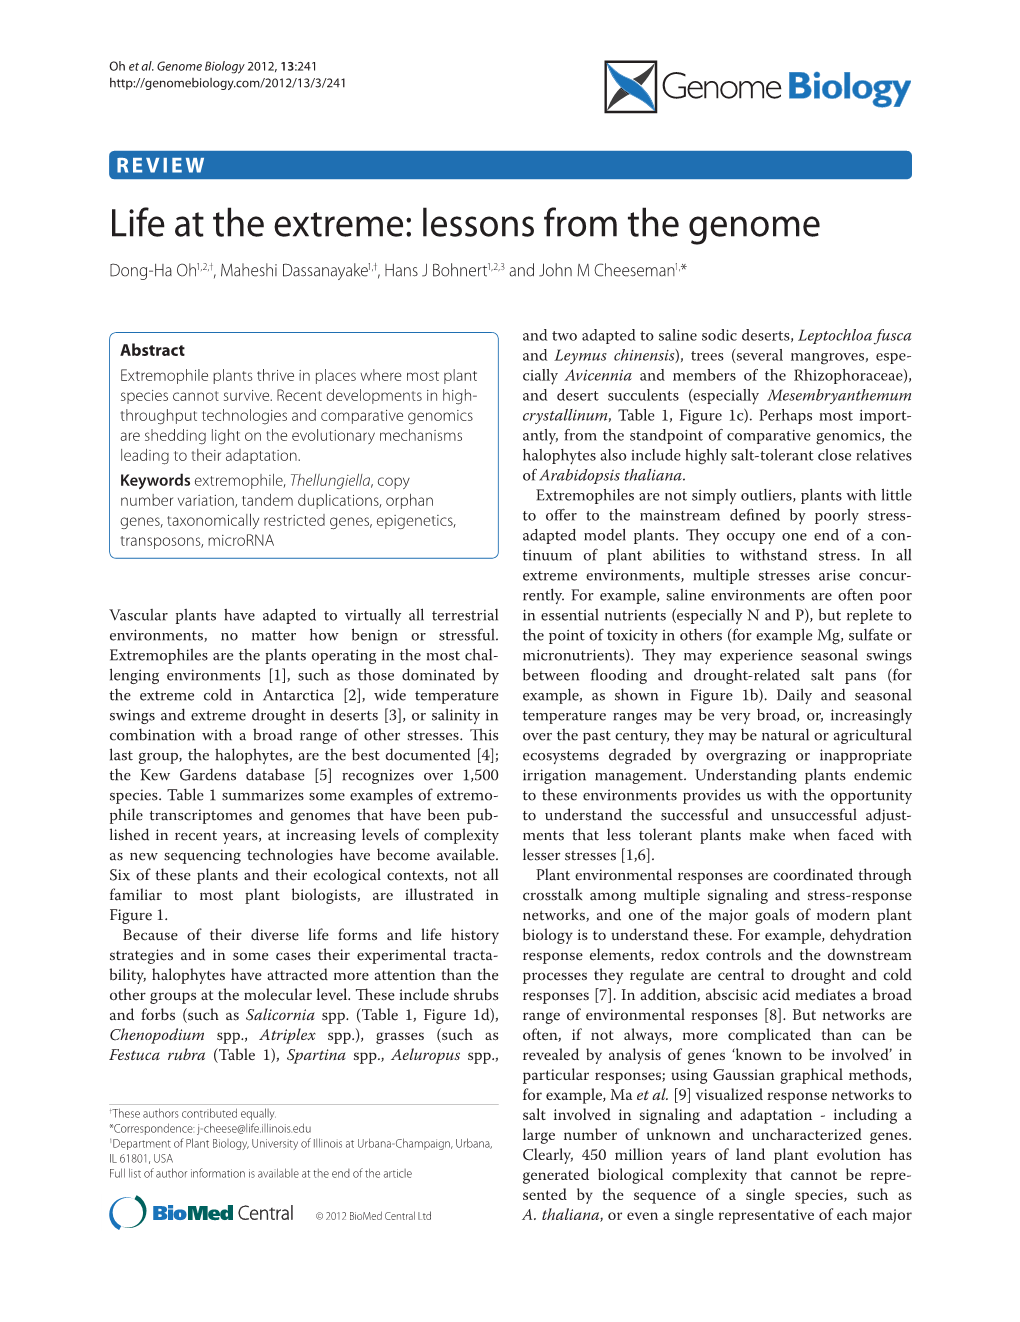 Life at the Extreme: Lessons from the Genome Dong-Ha Oh1,2,†, Maheshi Dassanayake1,†, Hans J Bohnert1,2,3 and John M Cheeseman1,*